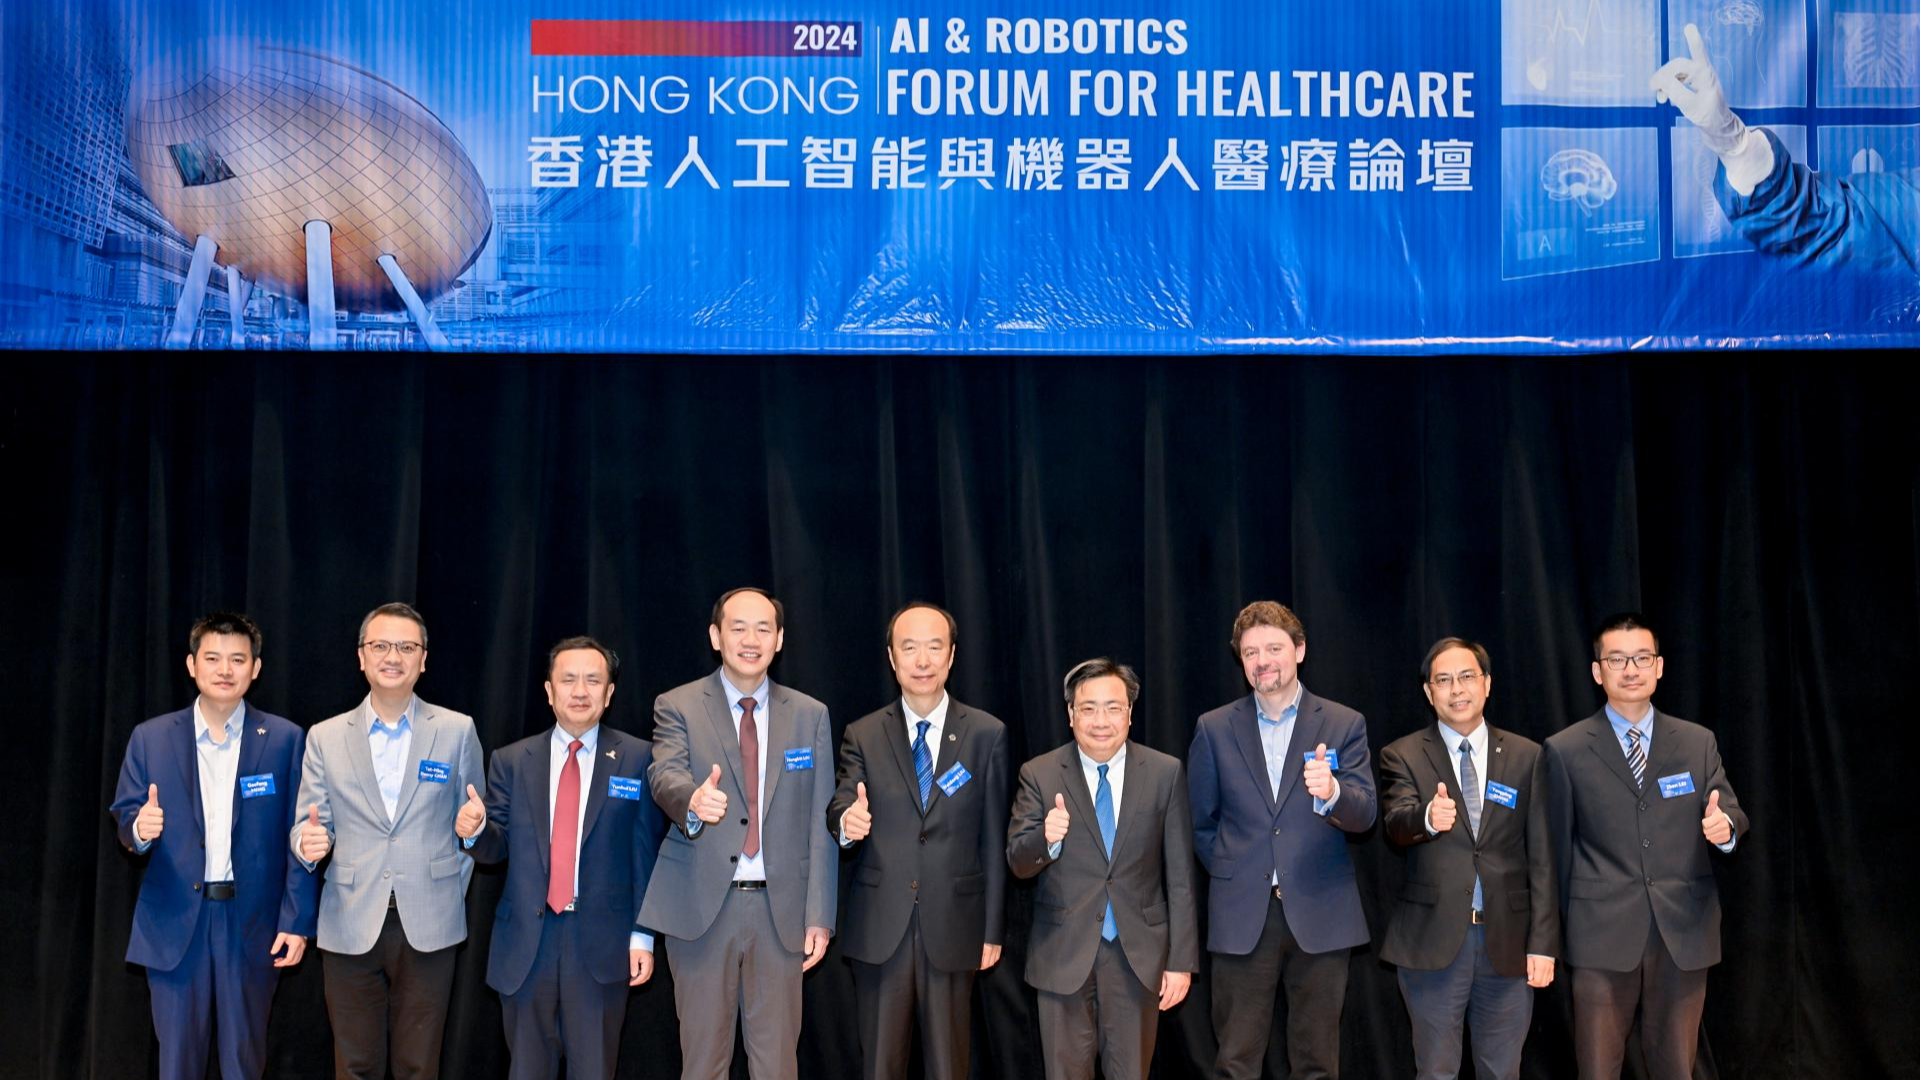 CAIR香港人工智能与机器人医疗论坛圆满落幕，聚焦科技与医疗的跨学科融合